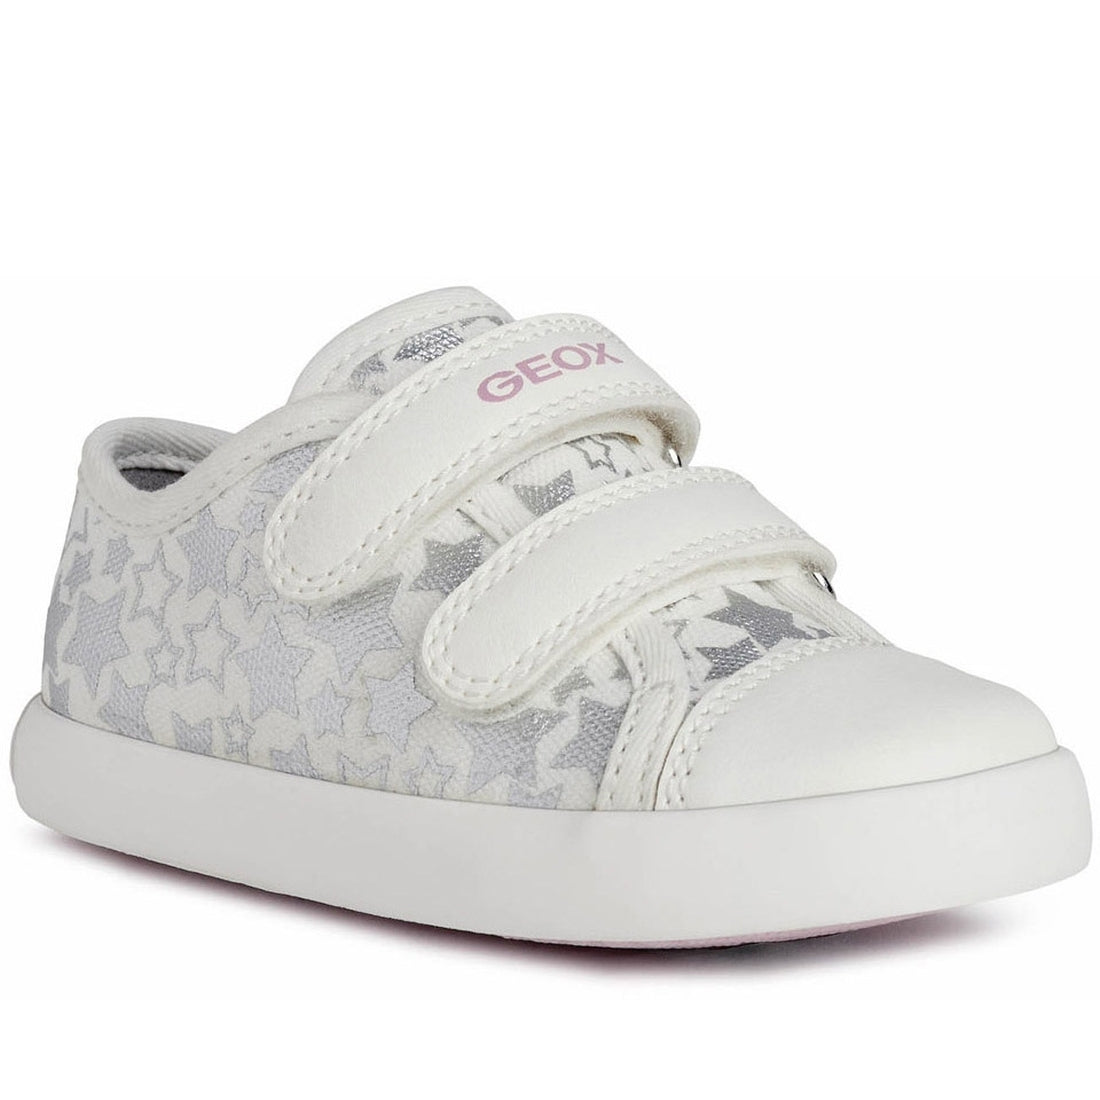 Geox Girls Optic White gisli shoes | Vilbury London